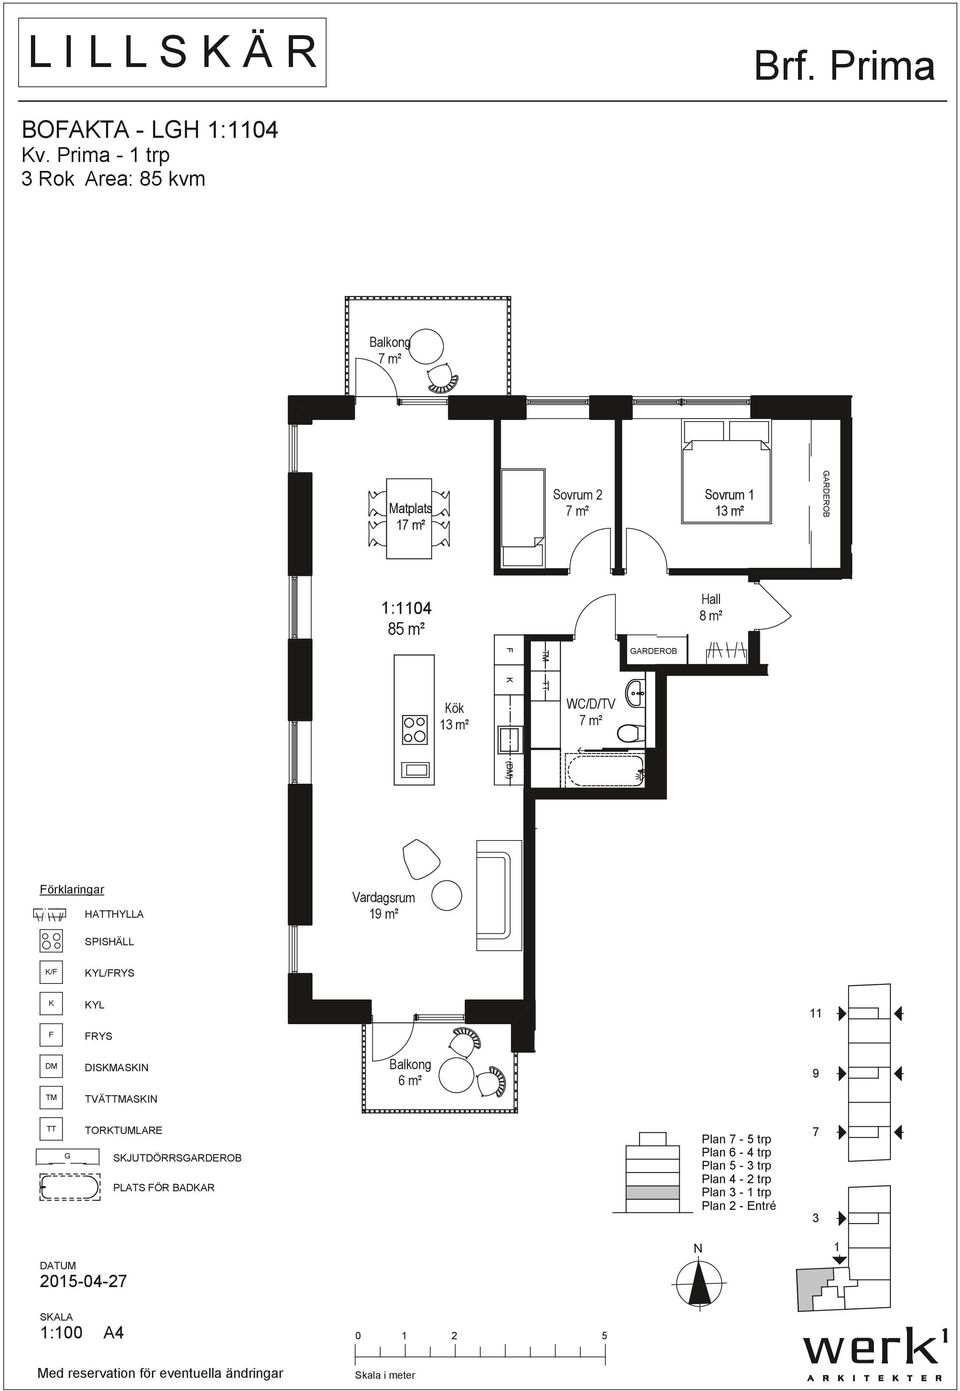 m² 5 m² / örklaringar HAHYLLA m² ök/vardagsrum 24 m² :0 50 m² / YL/RYS YL